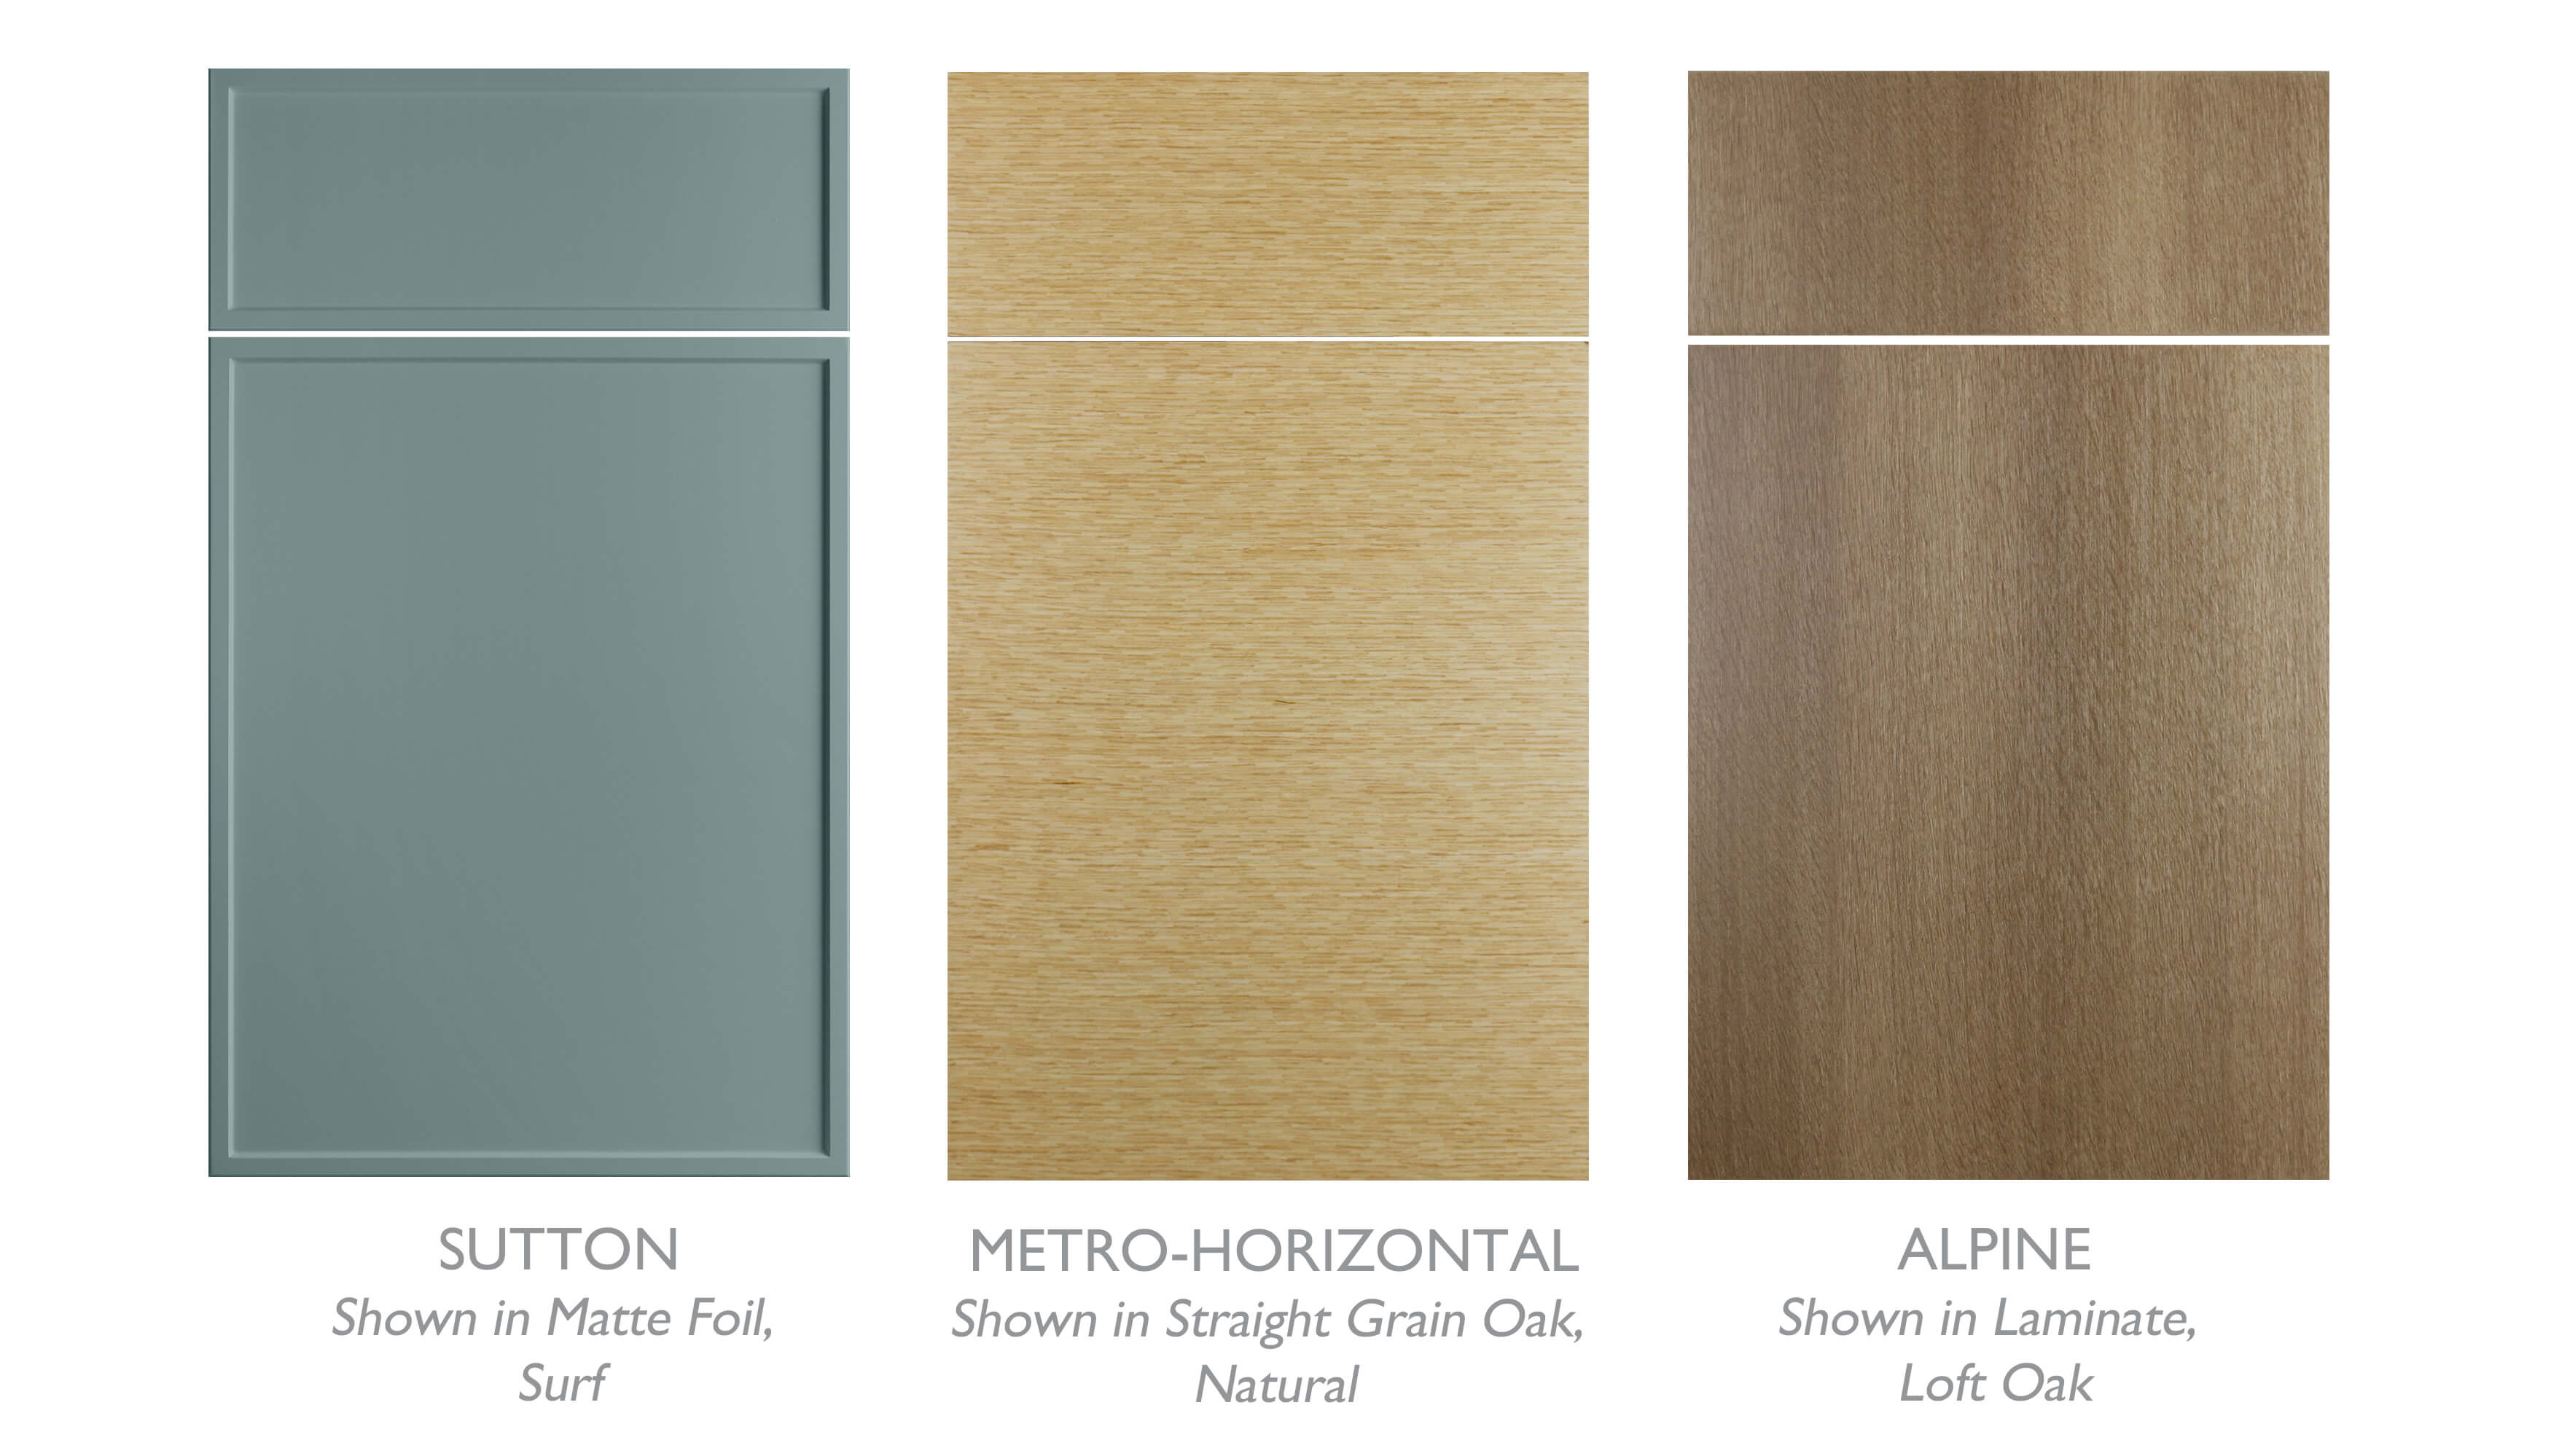 Asian Zen style cabinet door styles from Dura Supreme Cabinetry. Sutton in Surf Matte Foil, Metro-Horizontal in Straight Grain Oak Natural, and Alpine in Loft Oak Laminate.